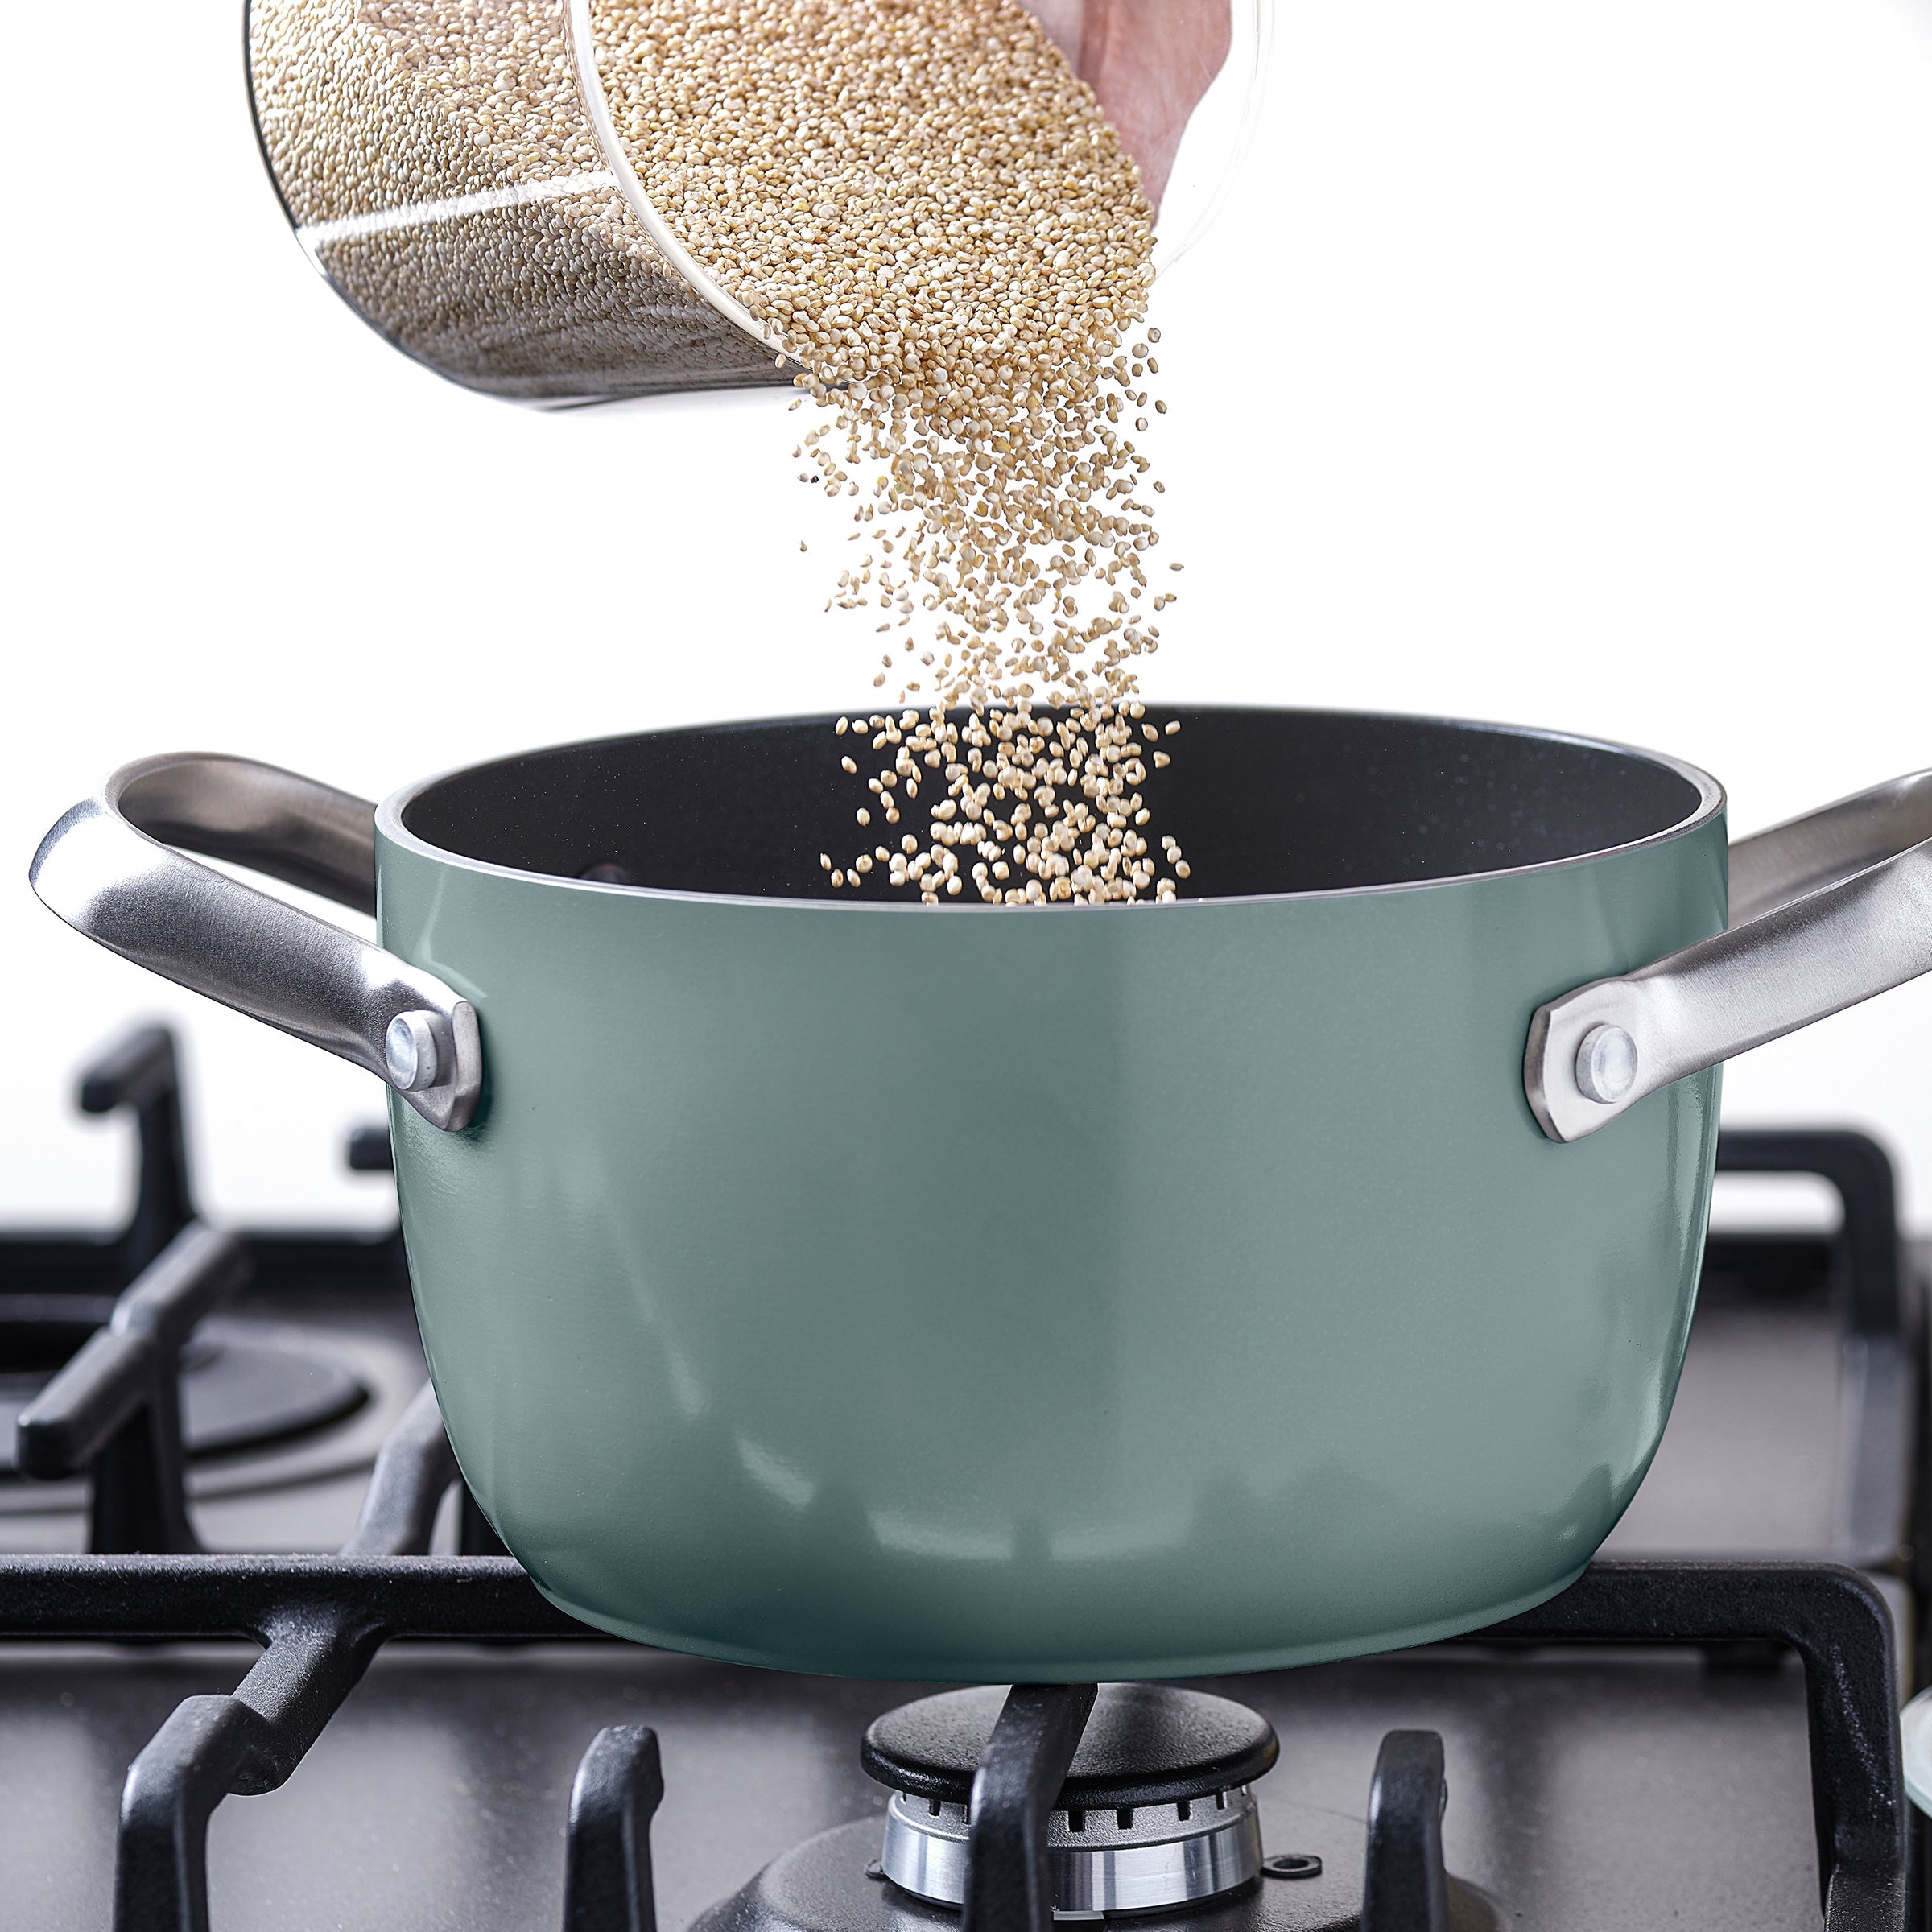 GreenPan 2-Quart Rice and Grains Cooker | Merlot